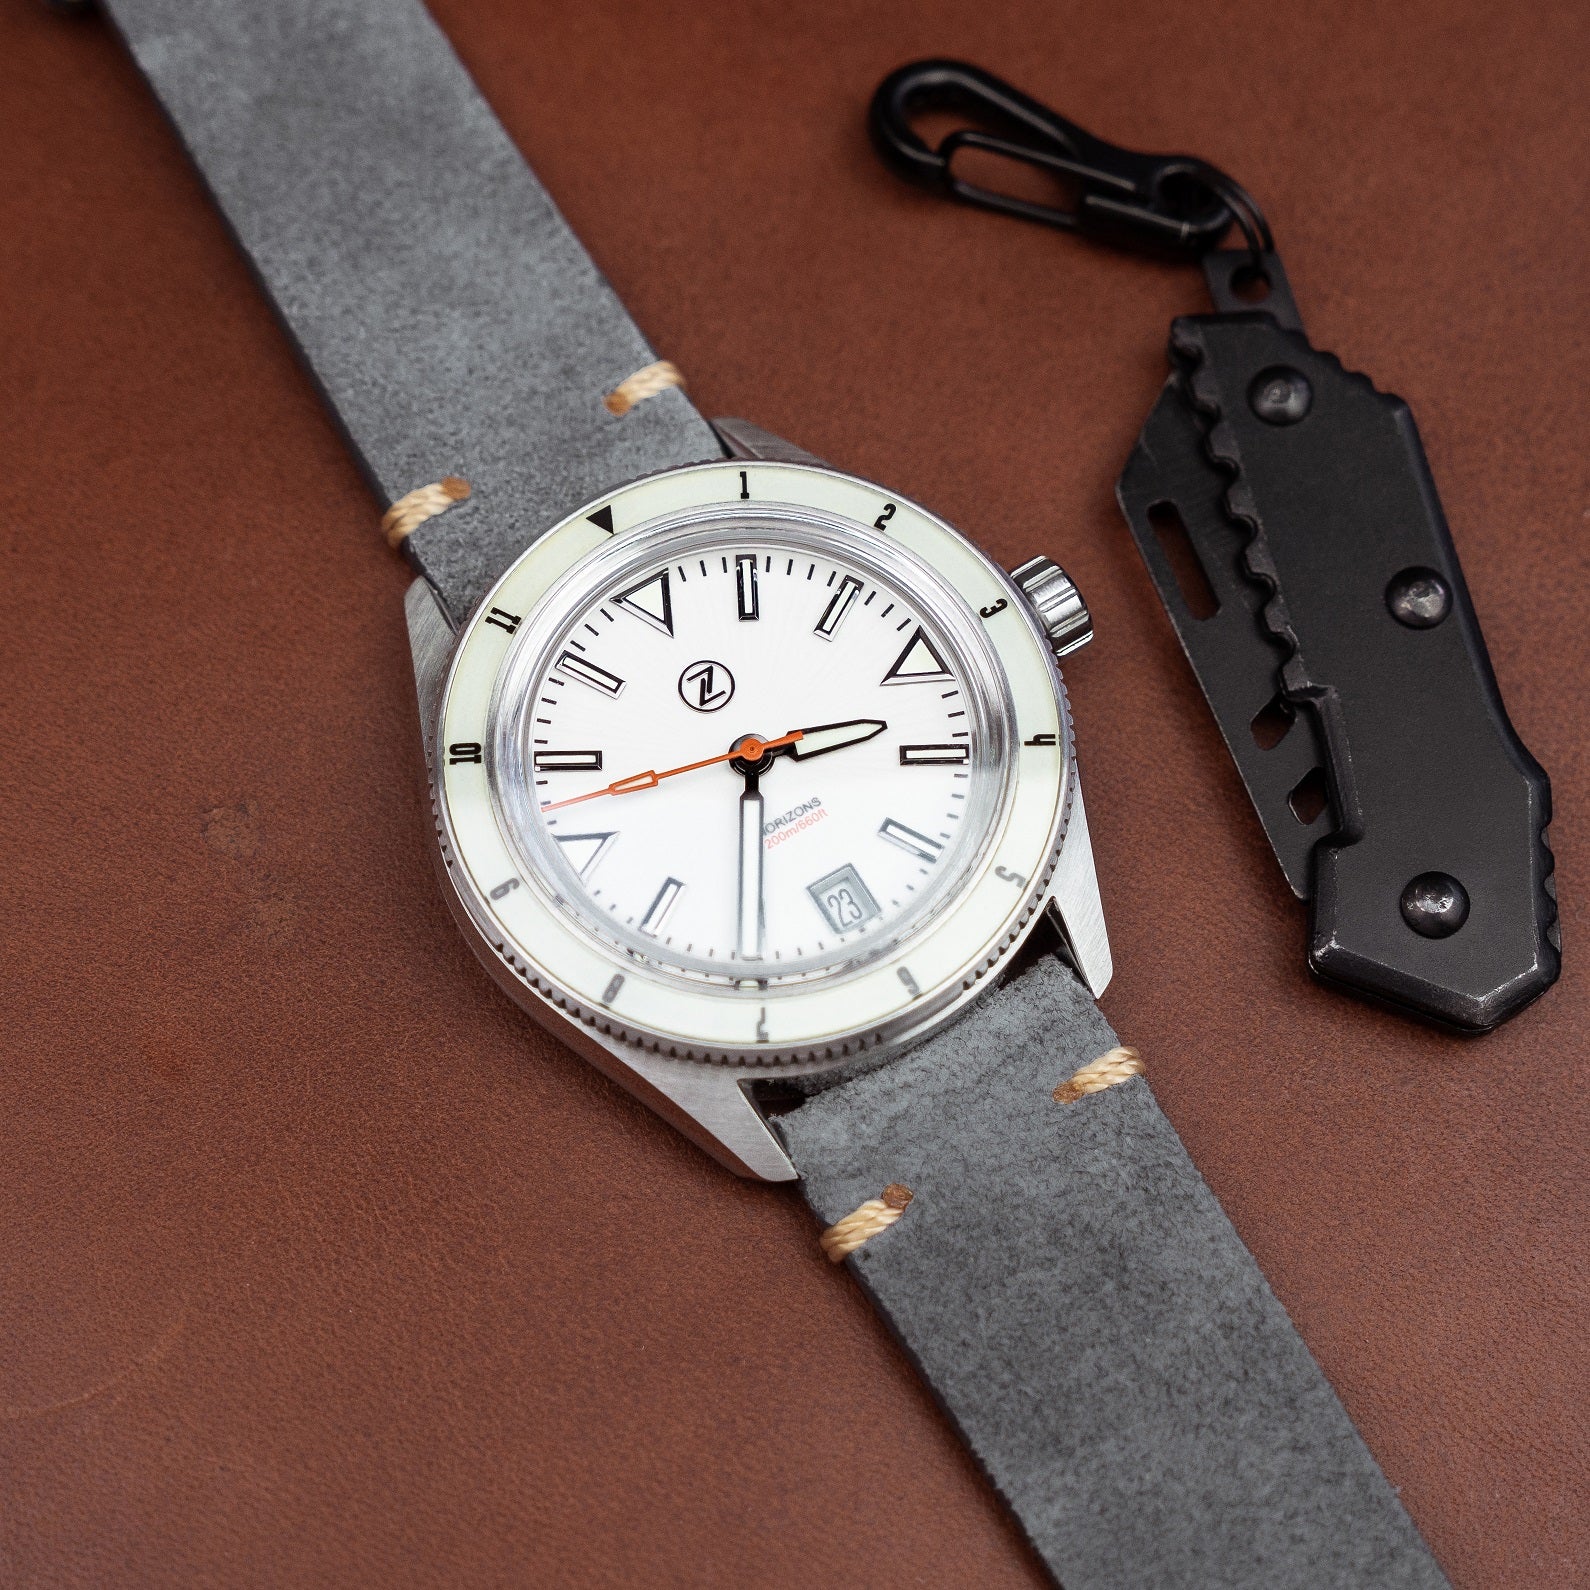 Premium Vintage Suede Leather Watch Strap in Grey